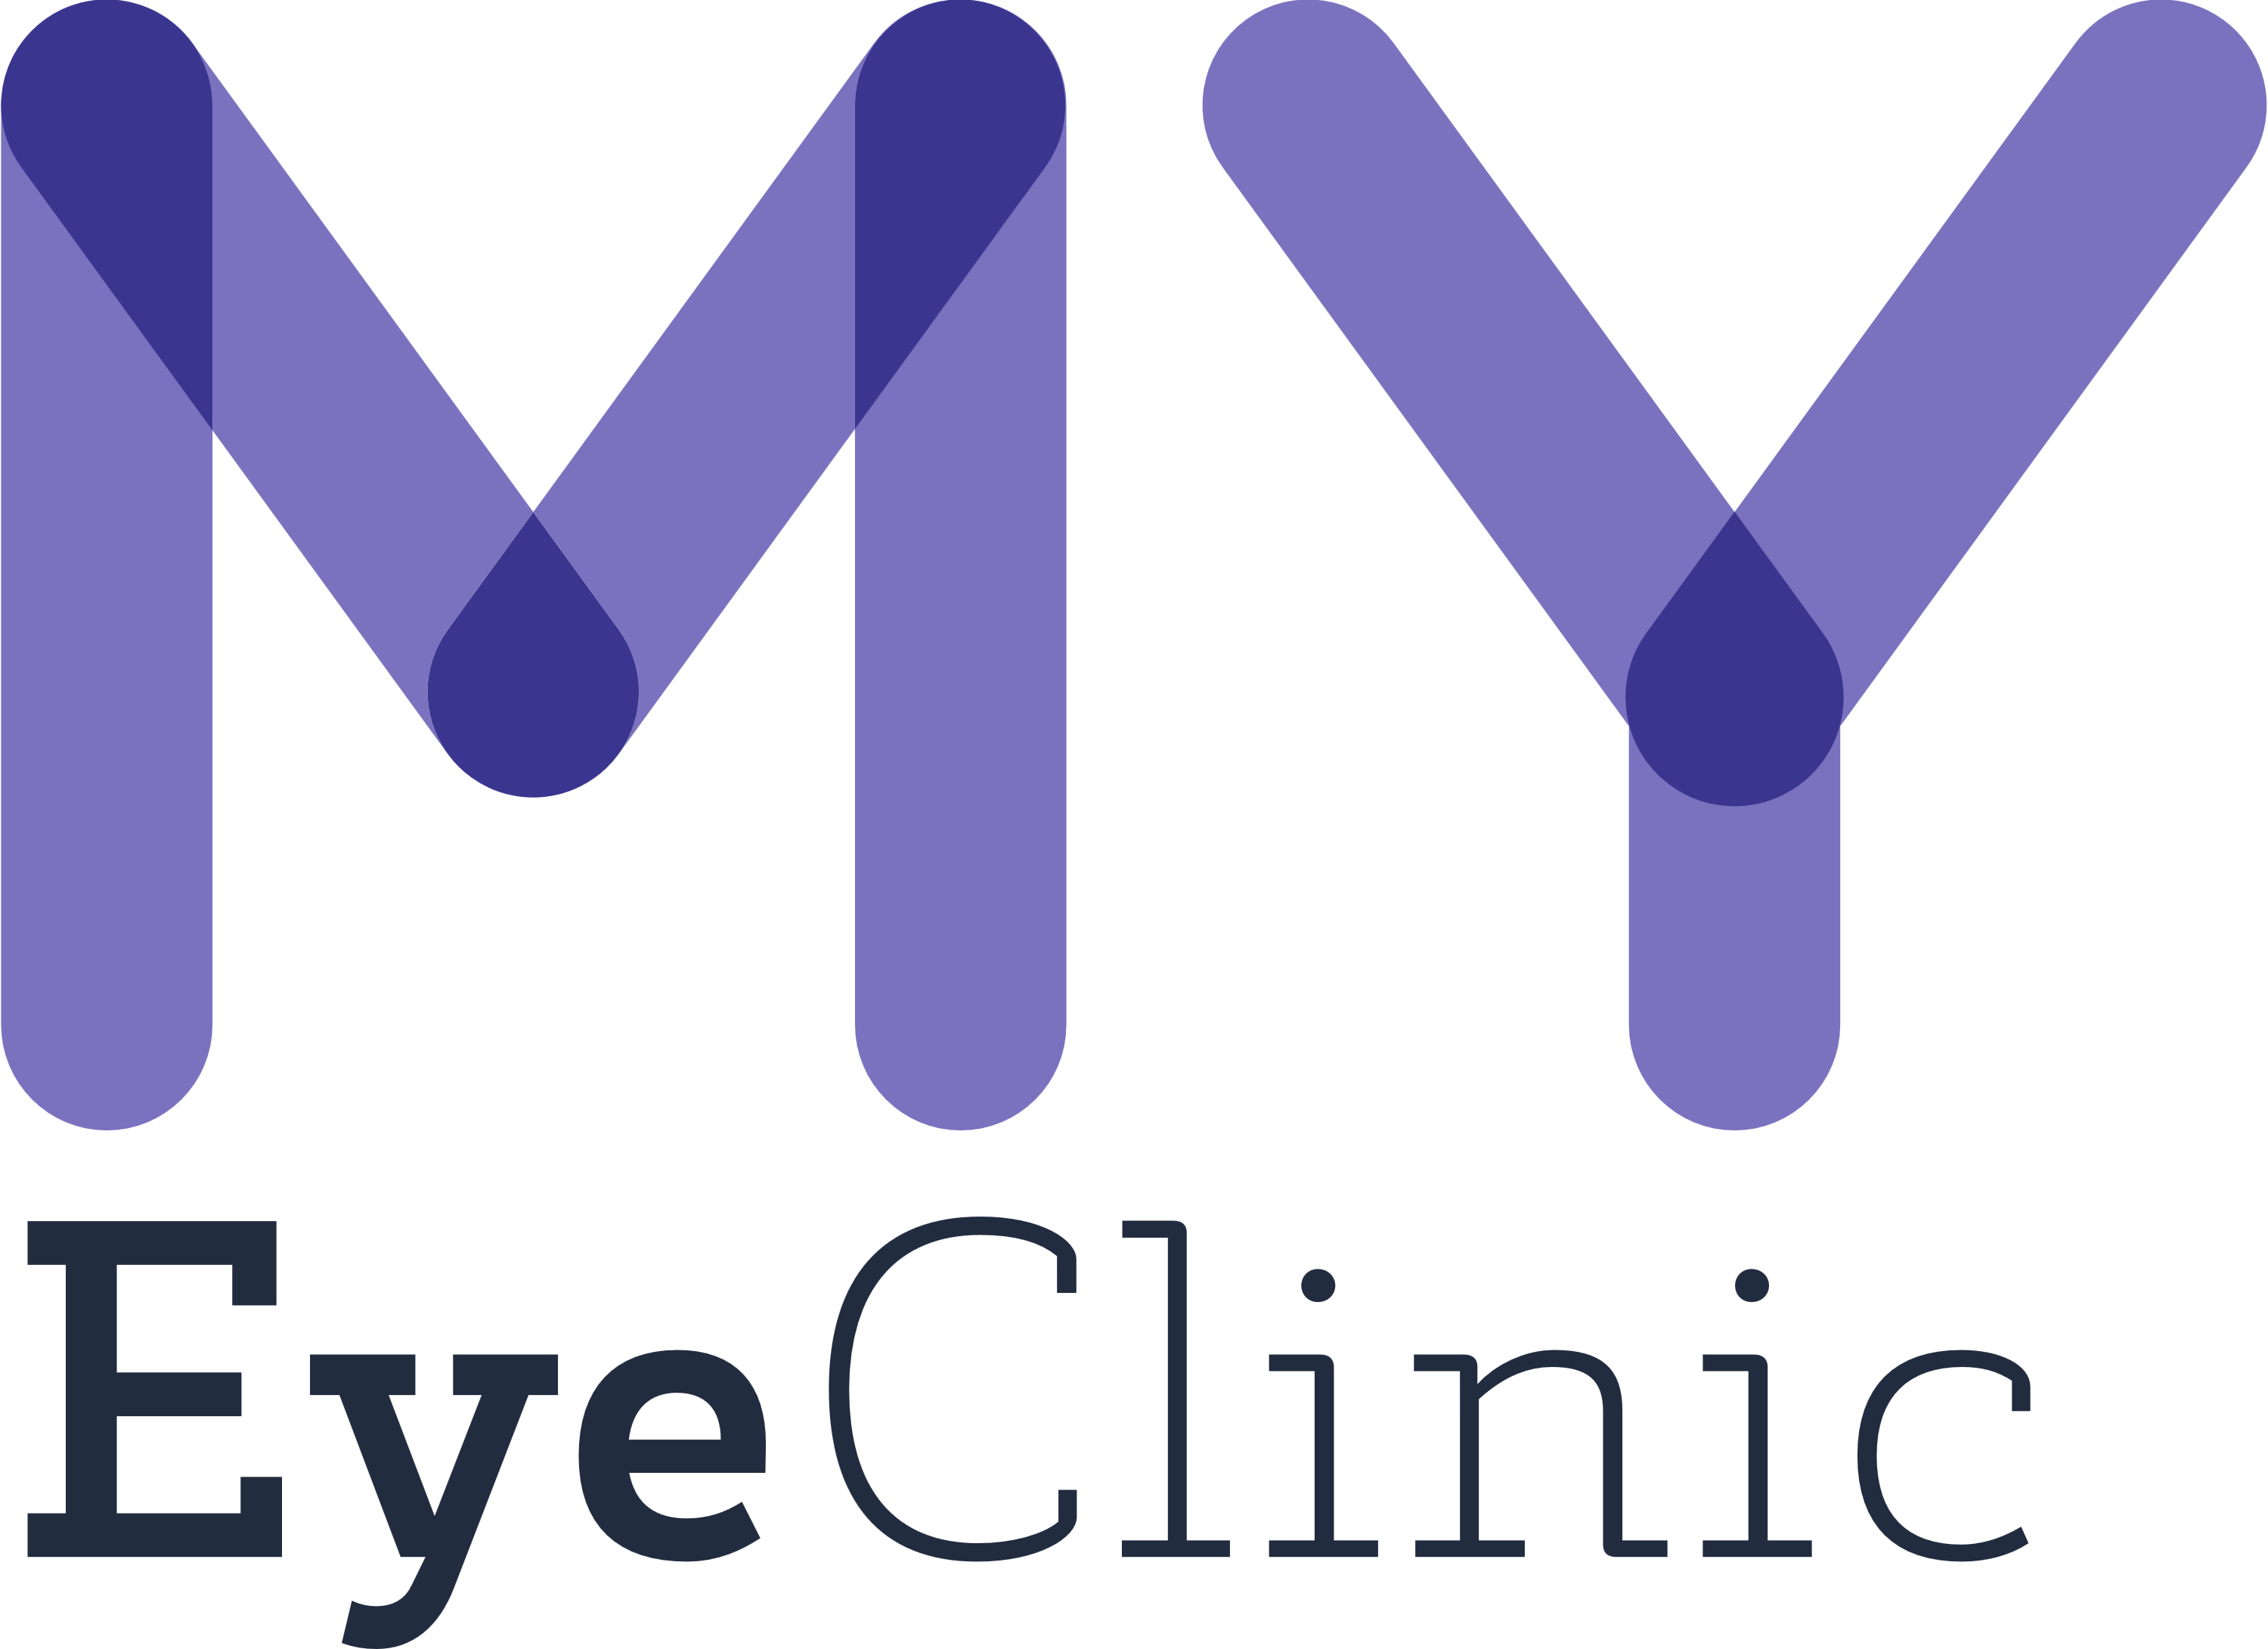  My  Eye Clinic Logos  Download